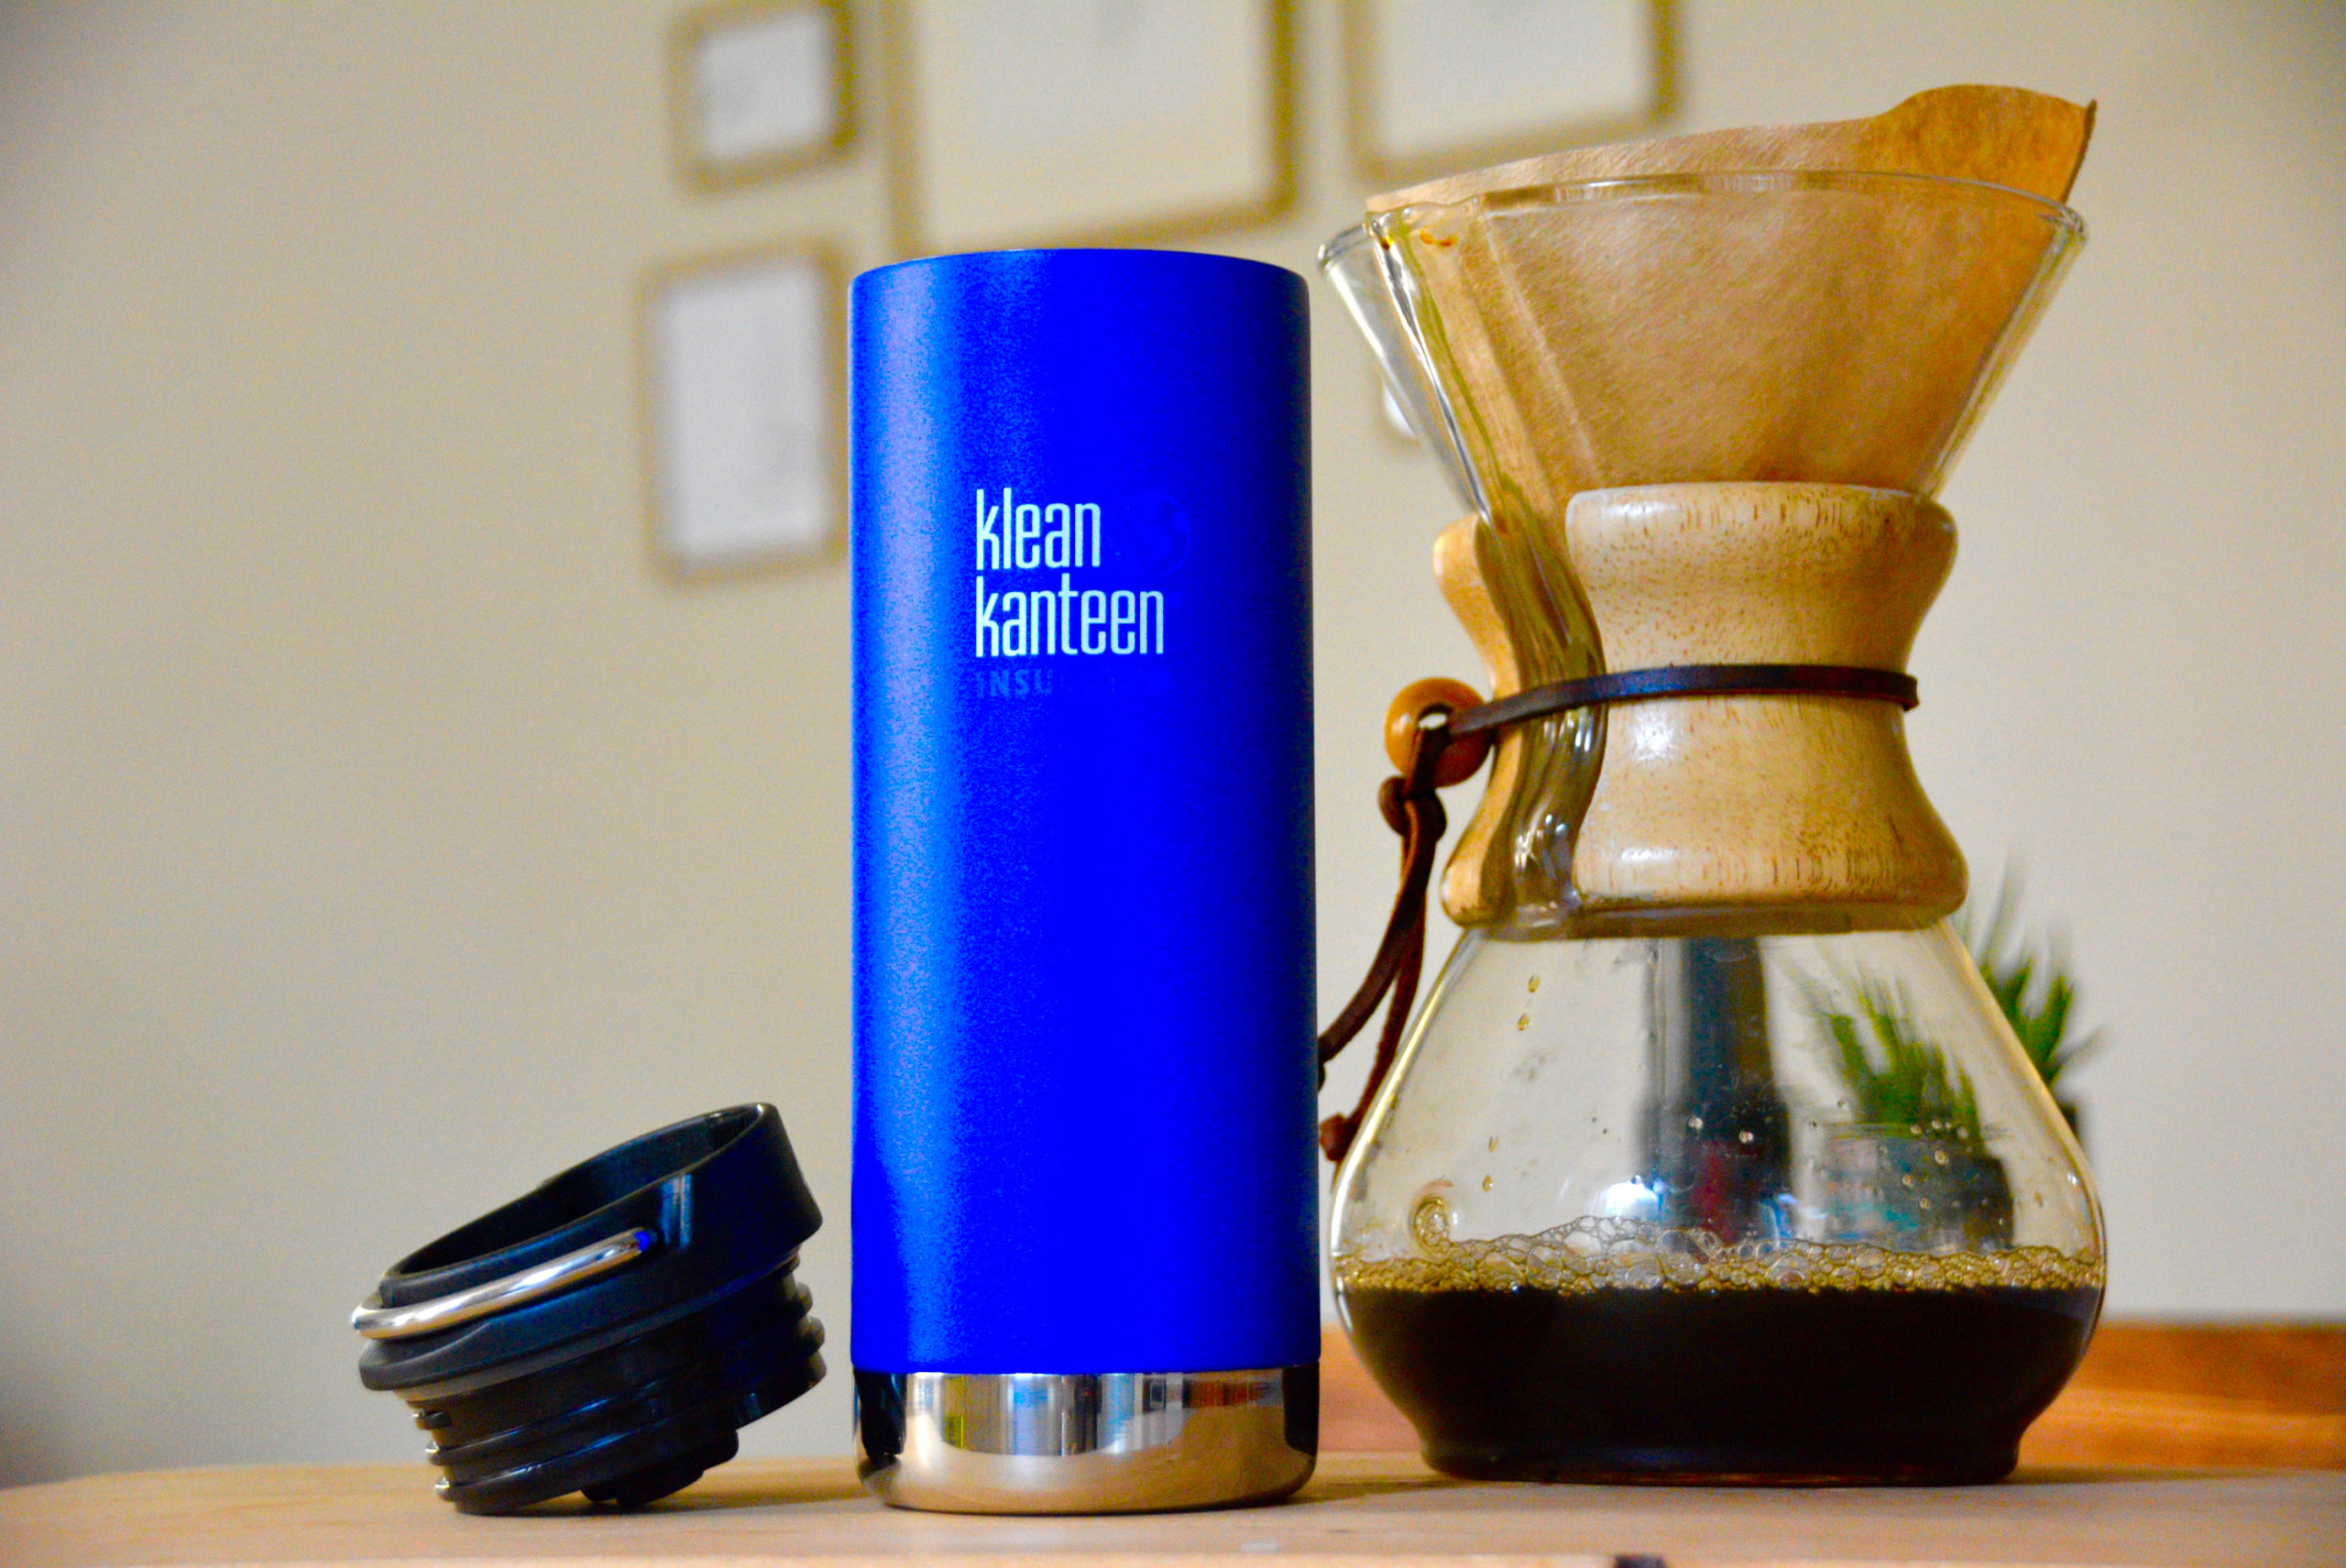 Canter Coffee Travel mug with a handle